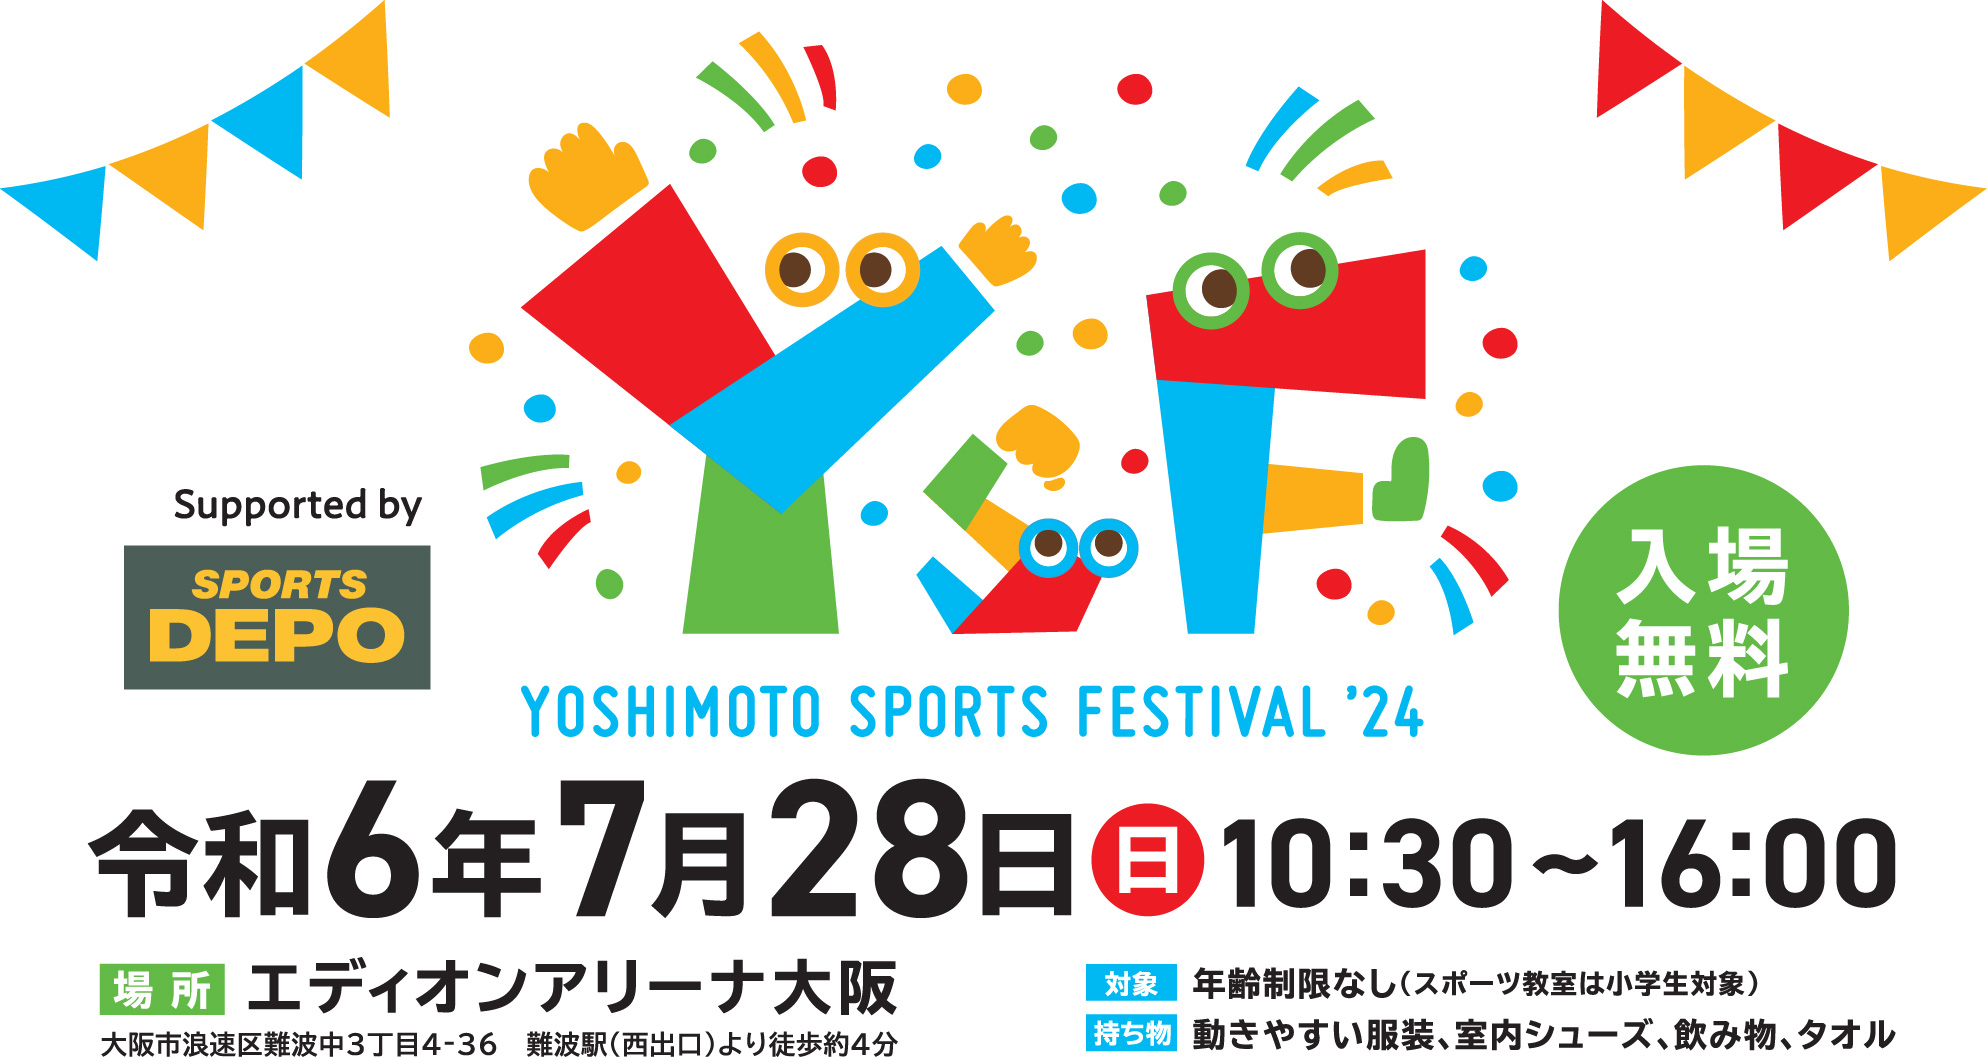 Yoshimoto Sports Festival ‘24